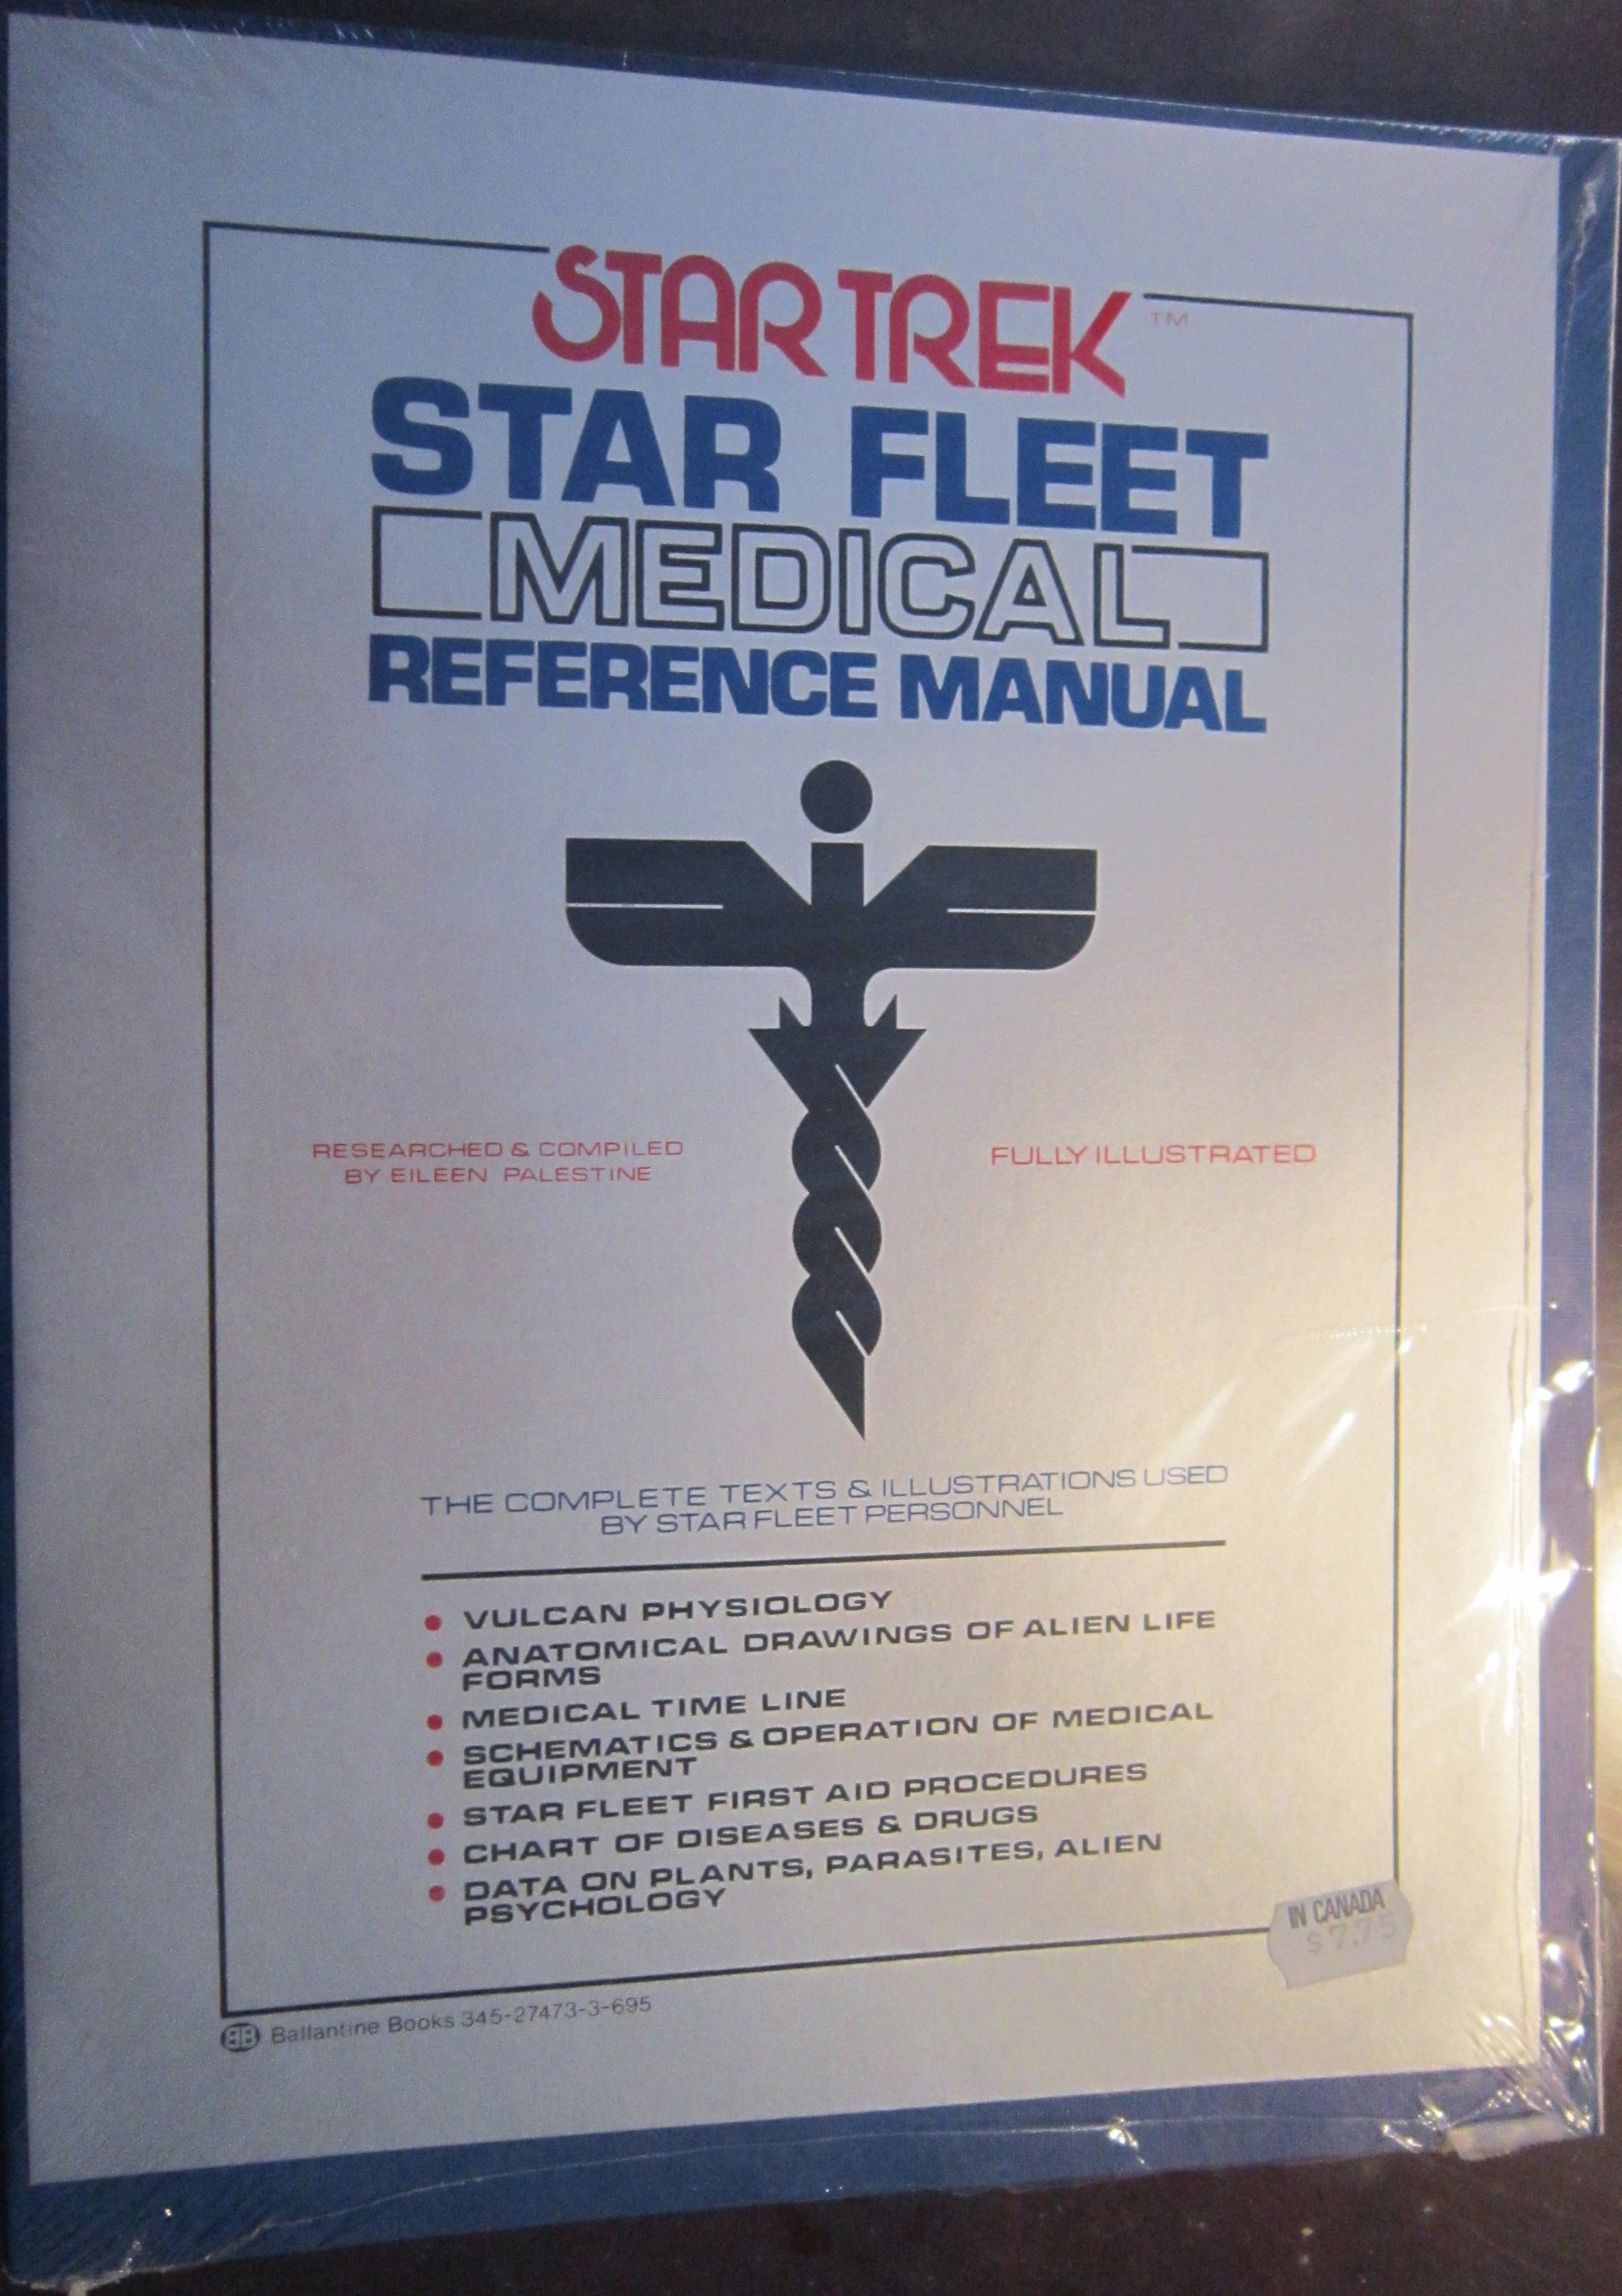 “Star Trek: Star Fleet Medical Reference Manual” Review by Collectingtrek.ca